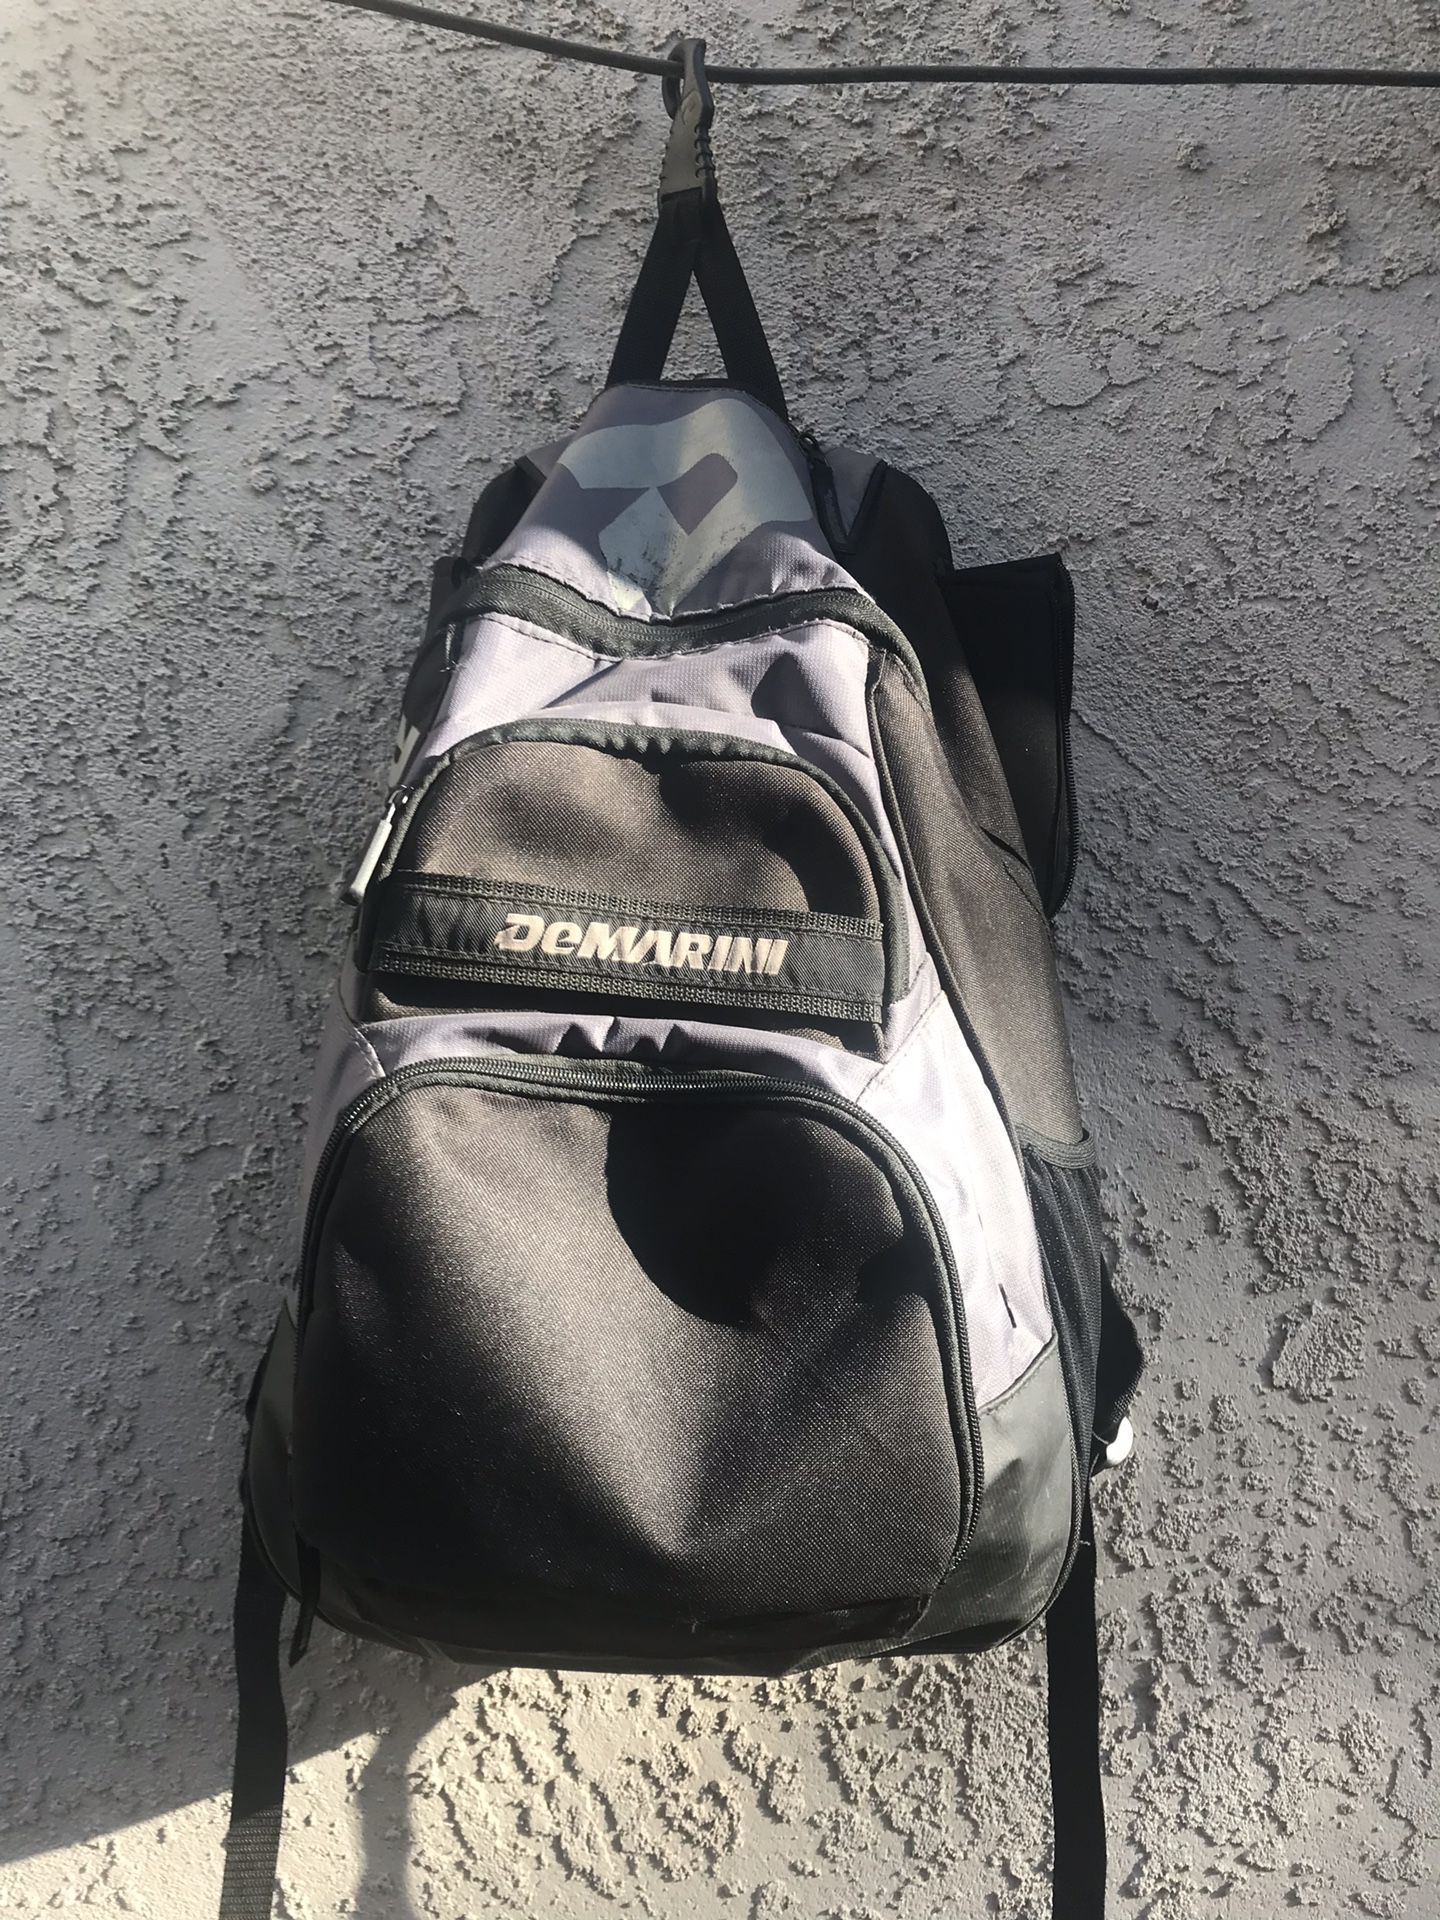 Demarini baseball backpack